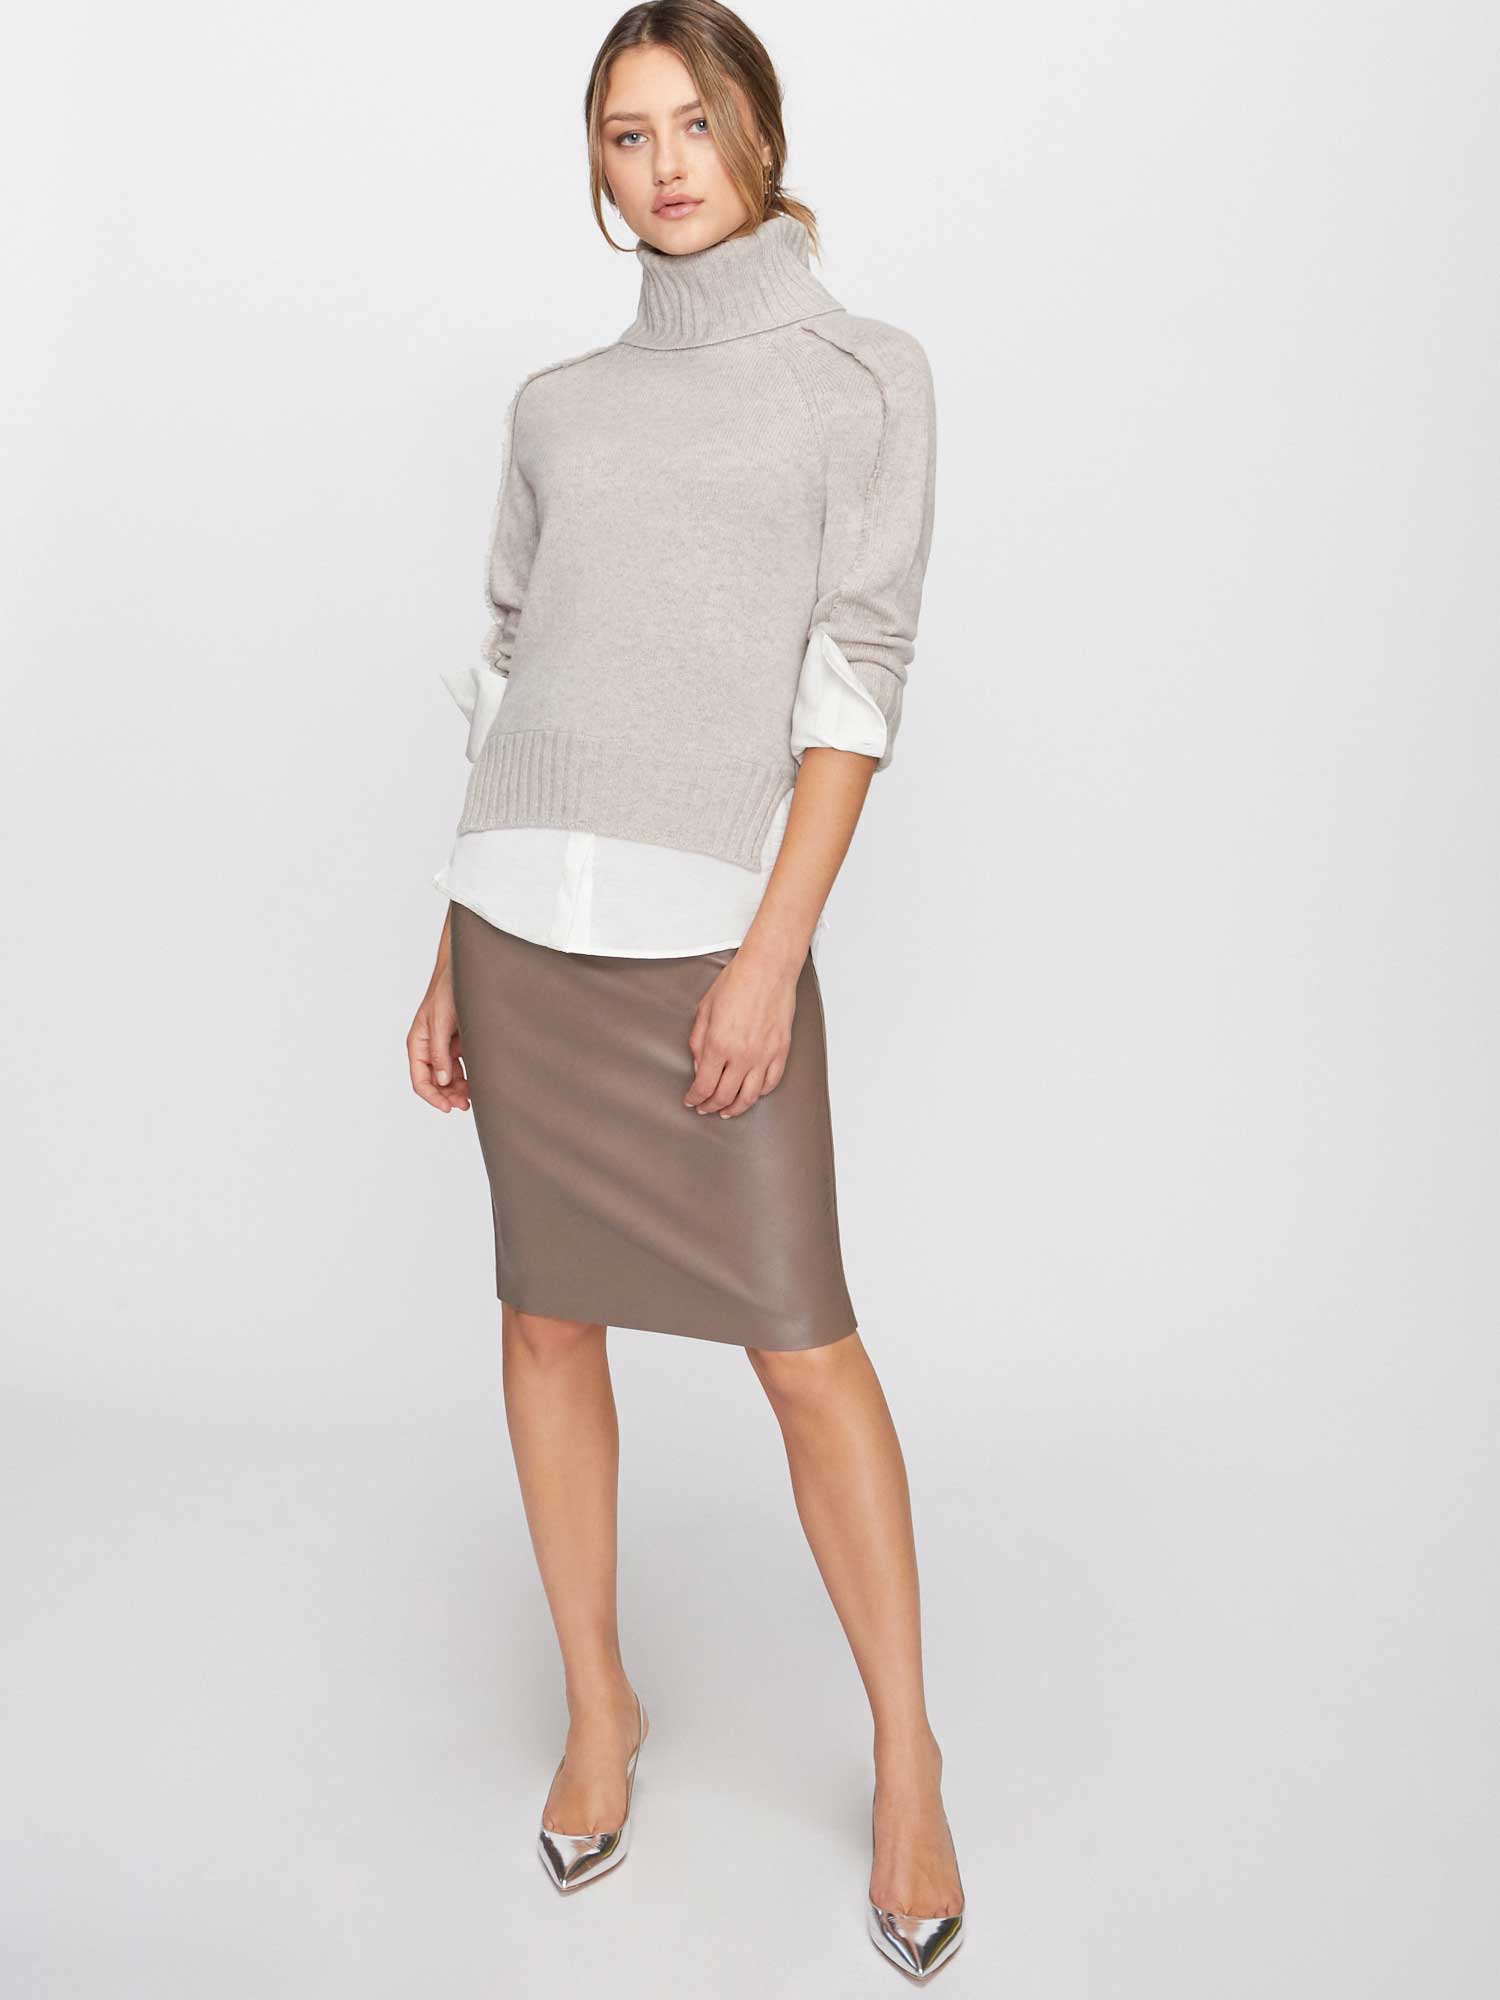 Jolie light grey layered turtleneck sweater full view